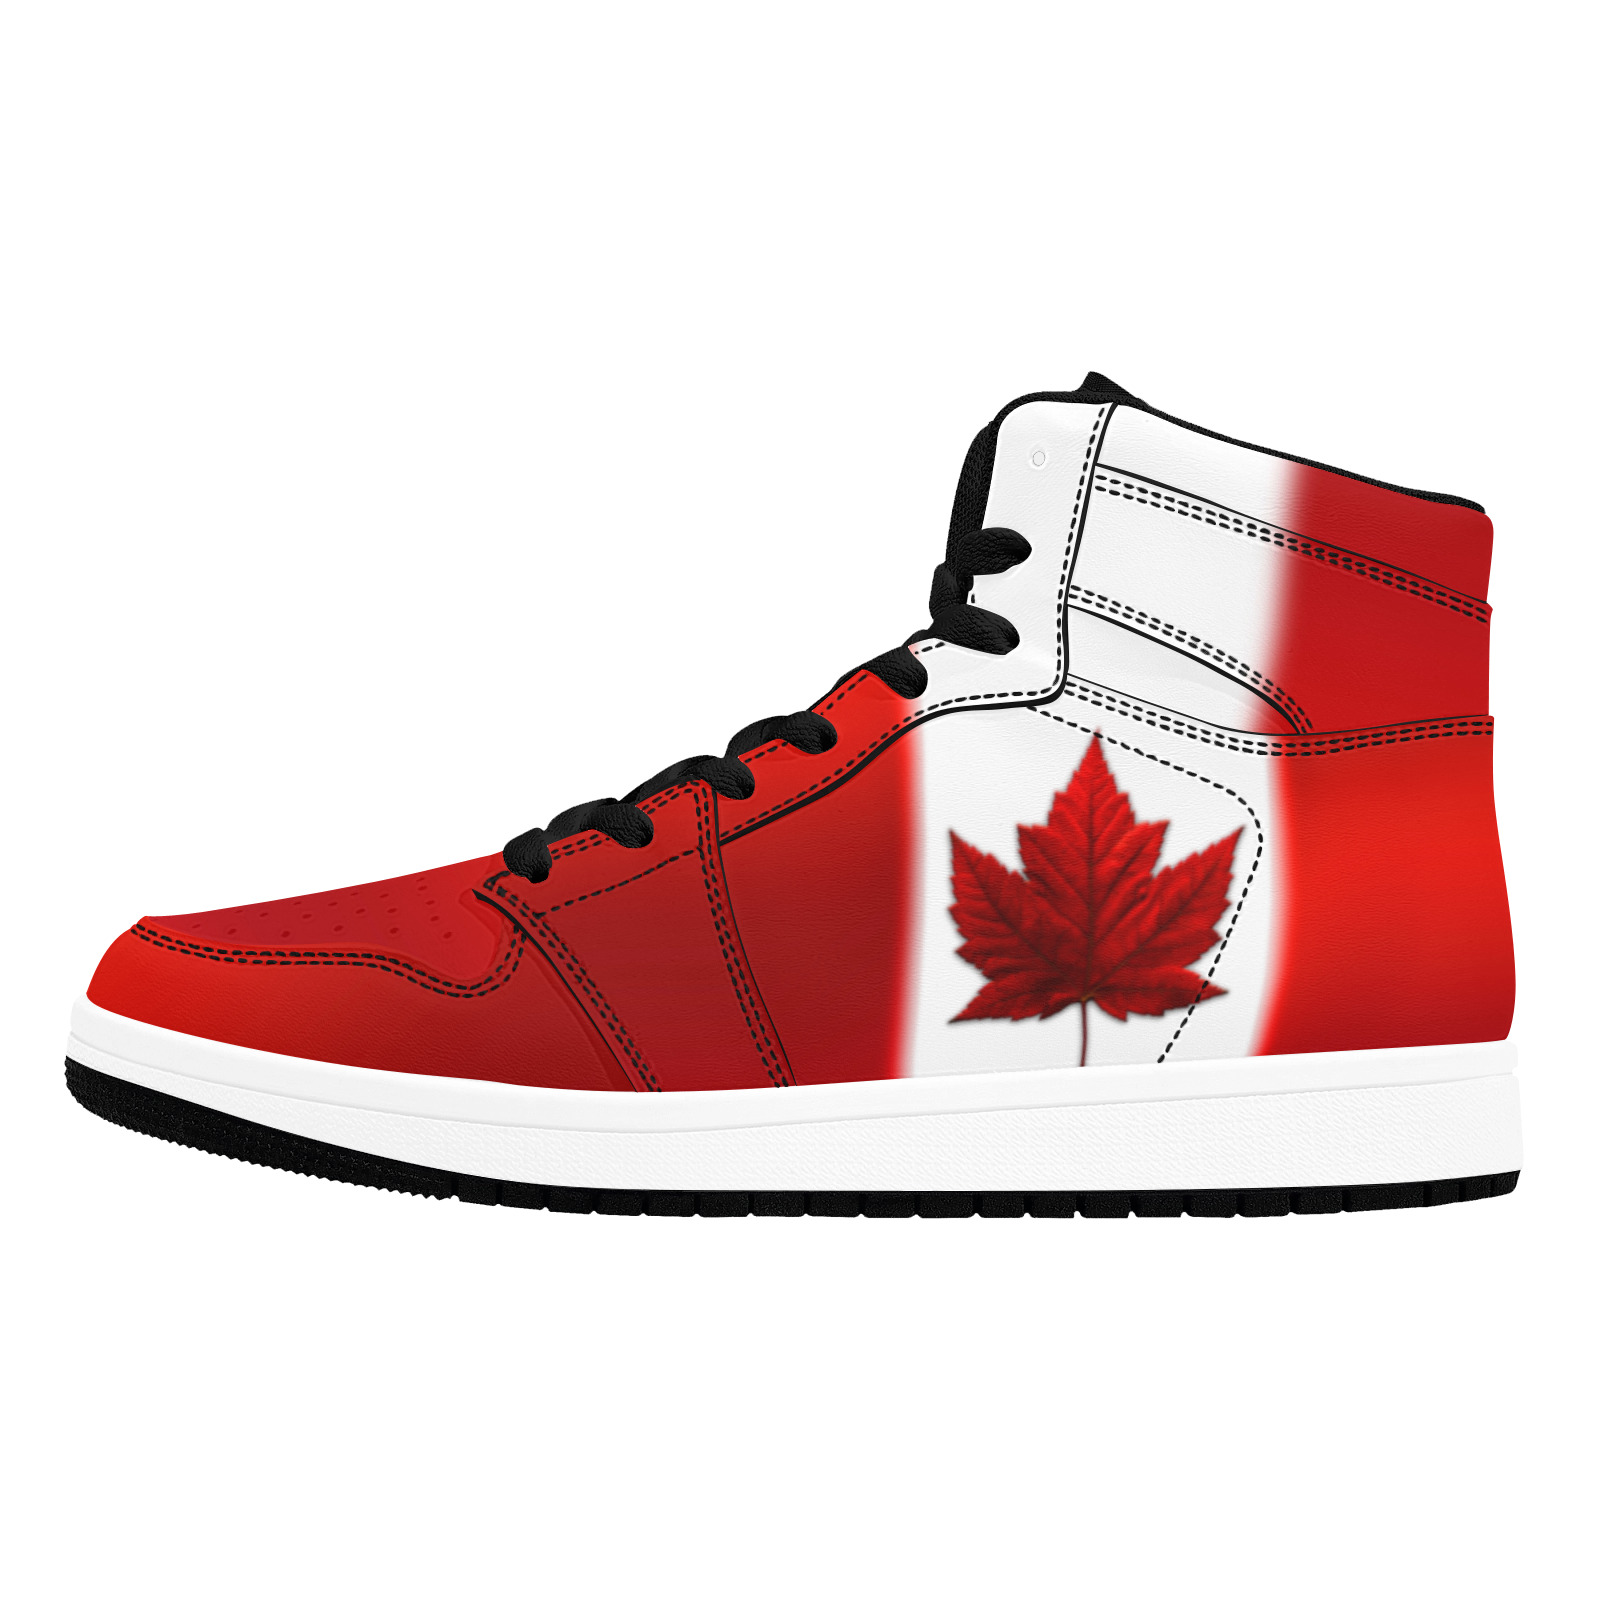 Canada Flag Sneakers Running Shoes Men's High Top Sneakers (Model 20042)